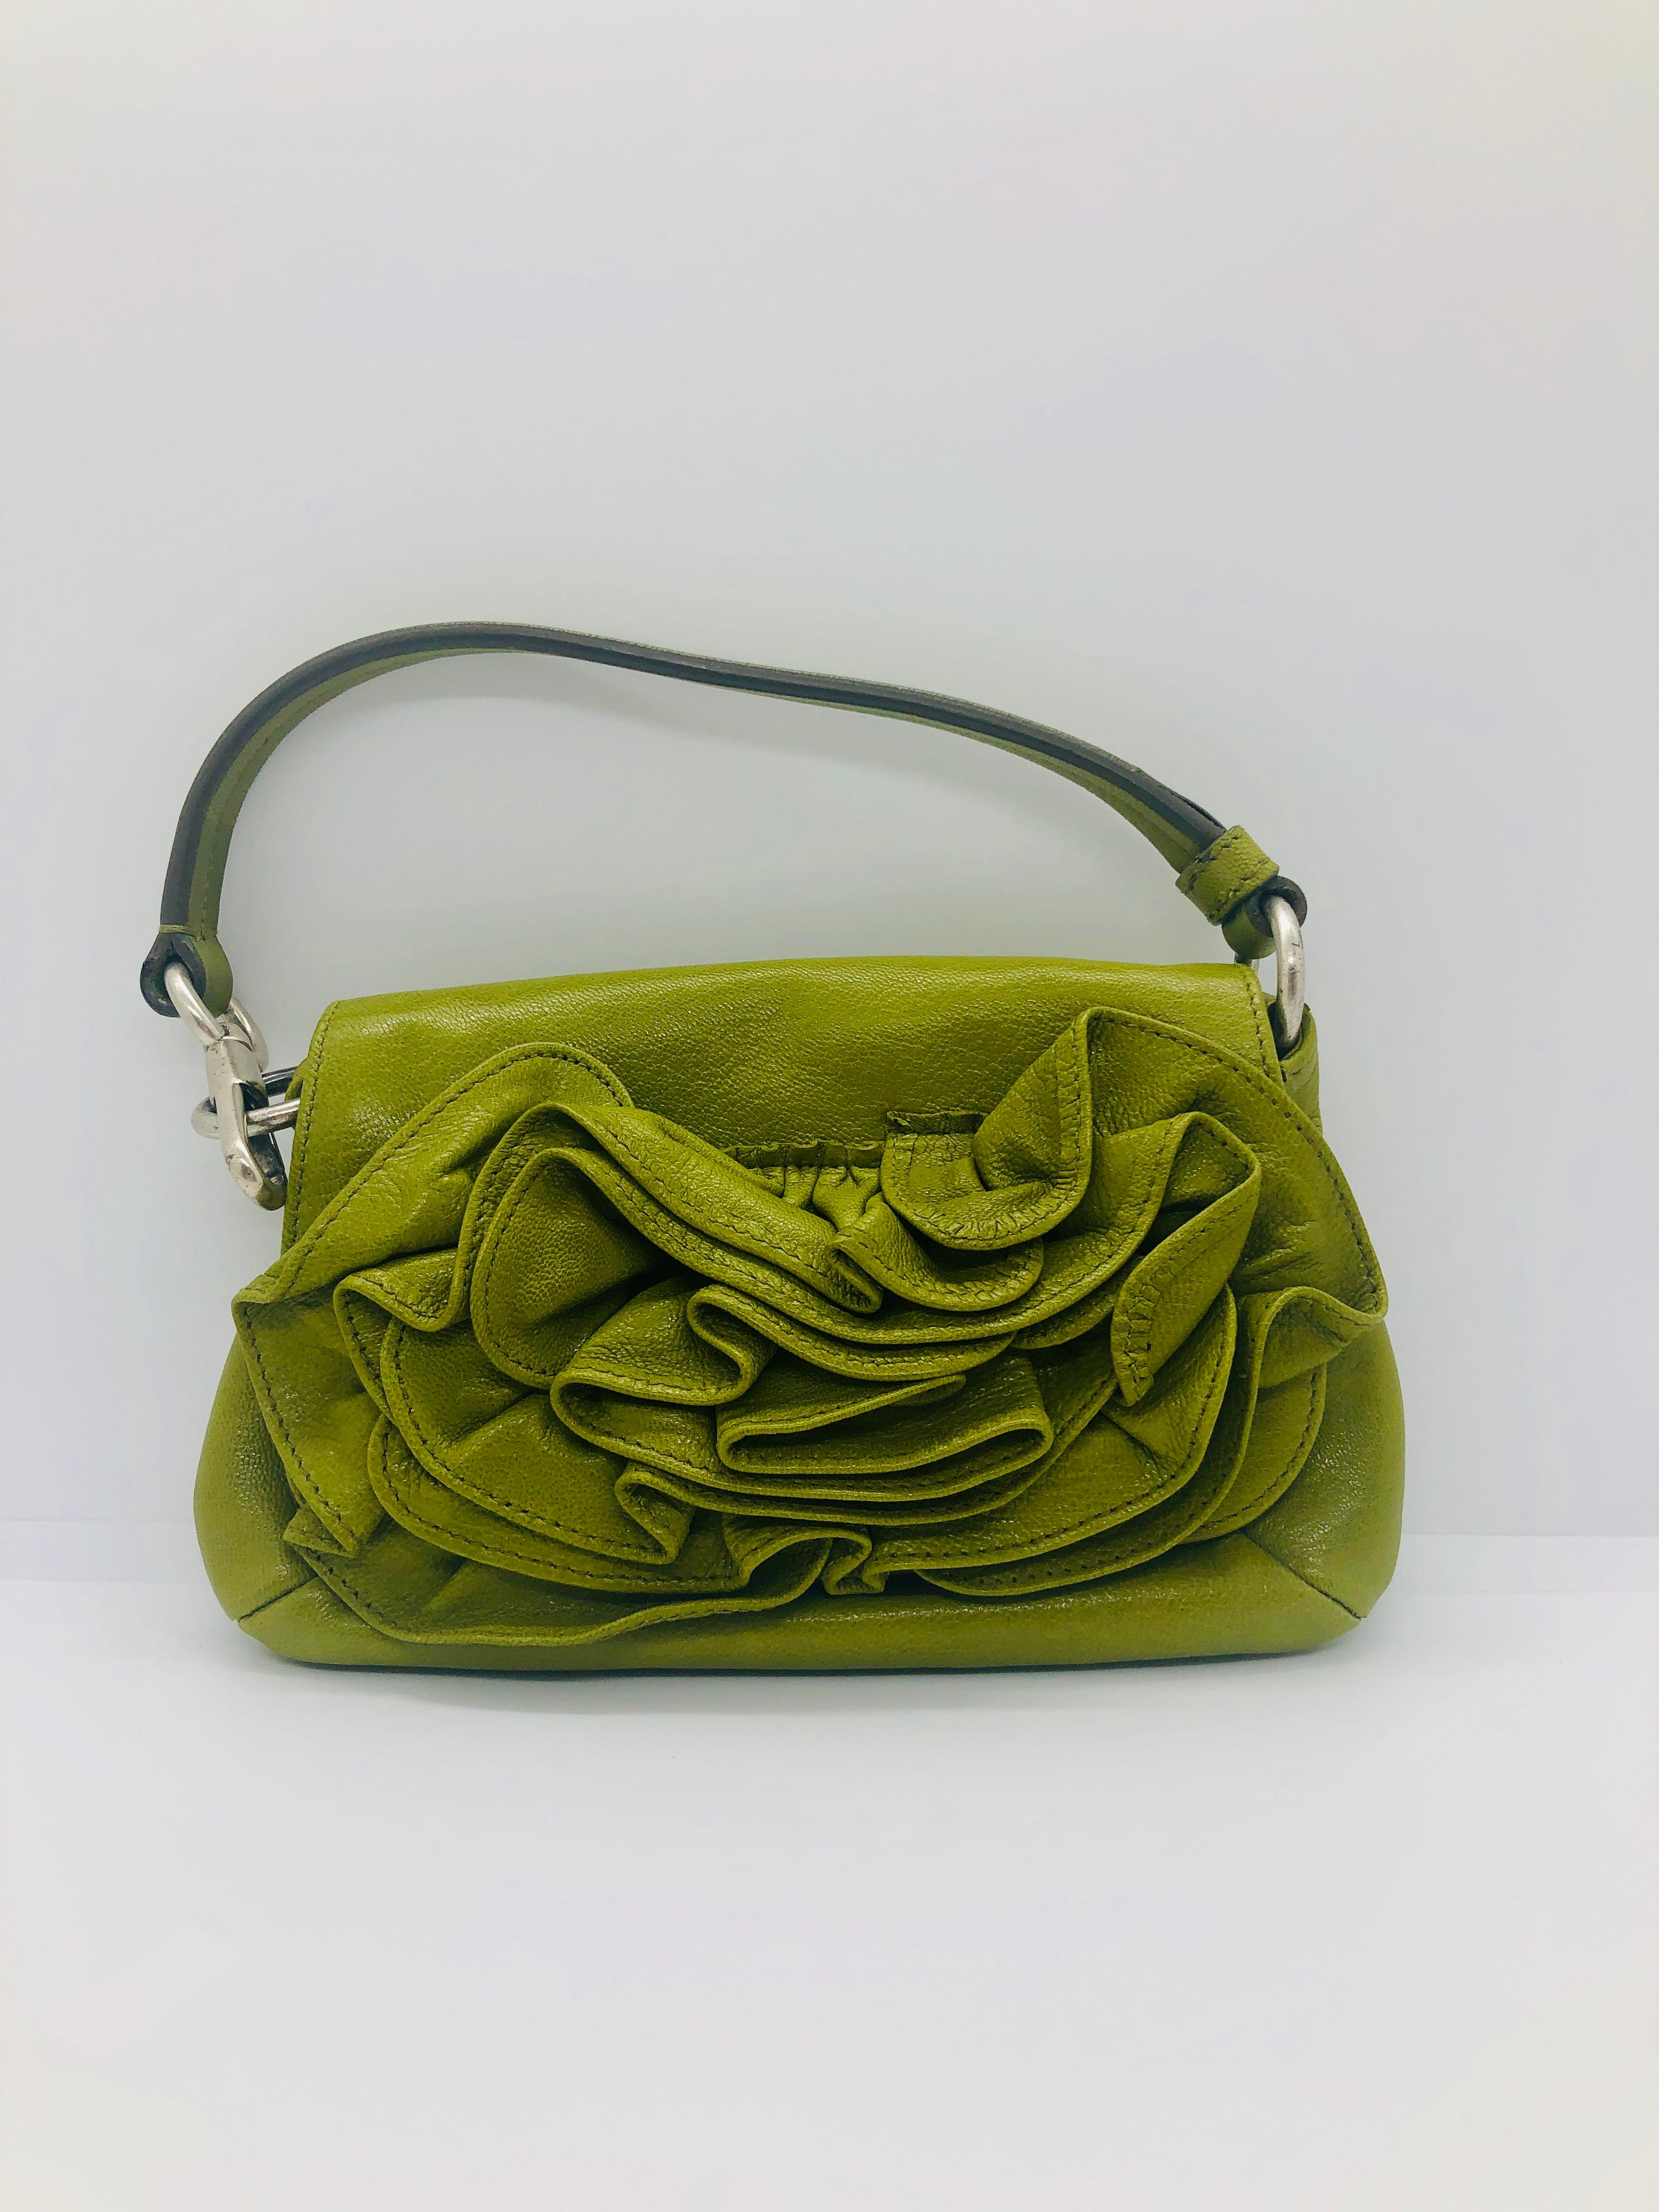 Yves Saint Laurent Chartreuse Green Leather Floral Ruffle Mini Shoulder Bag 7